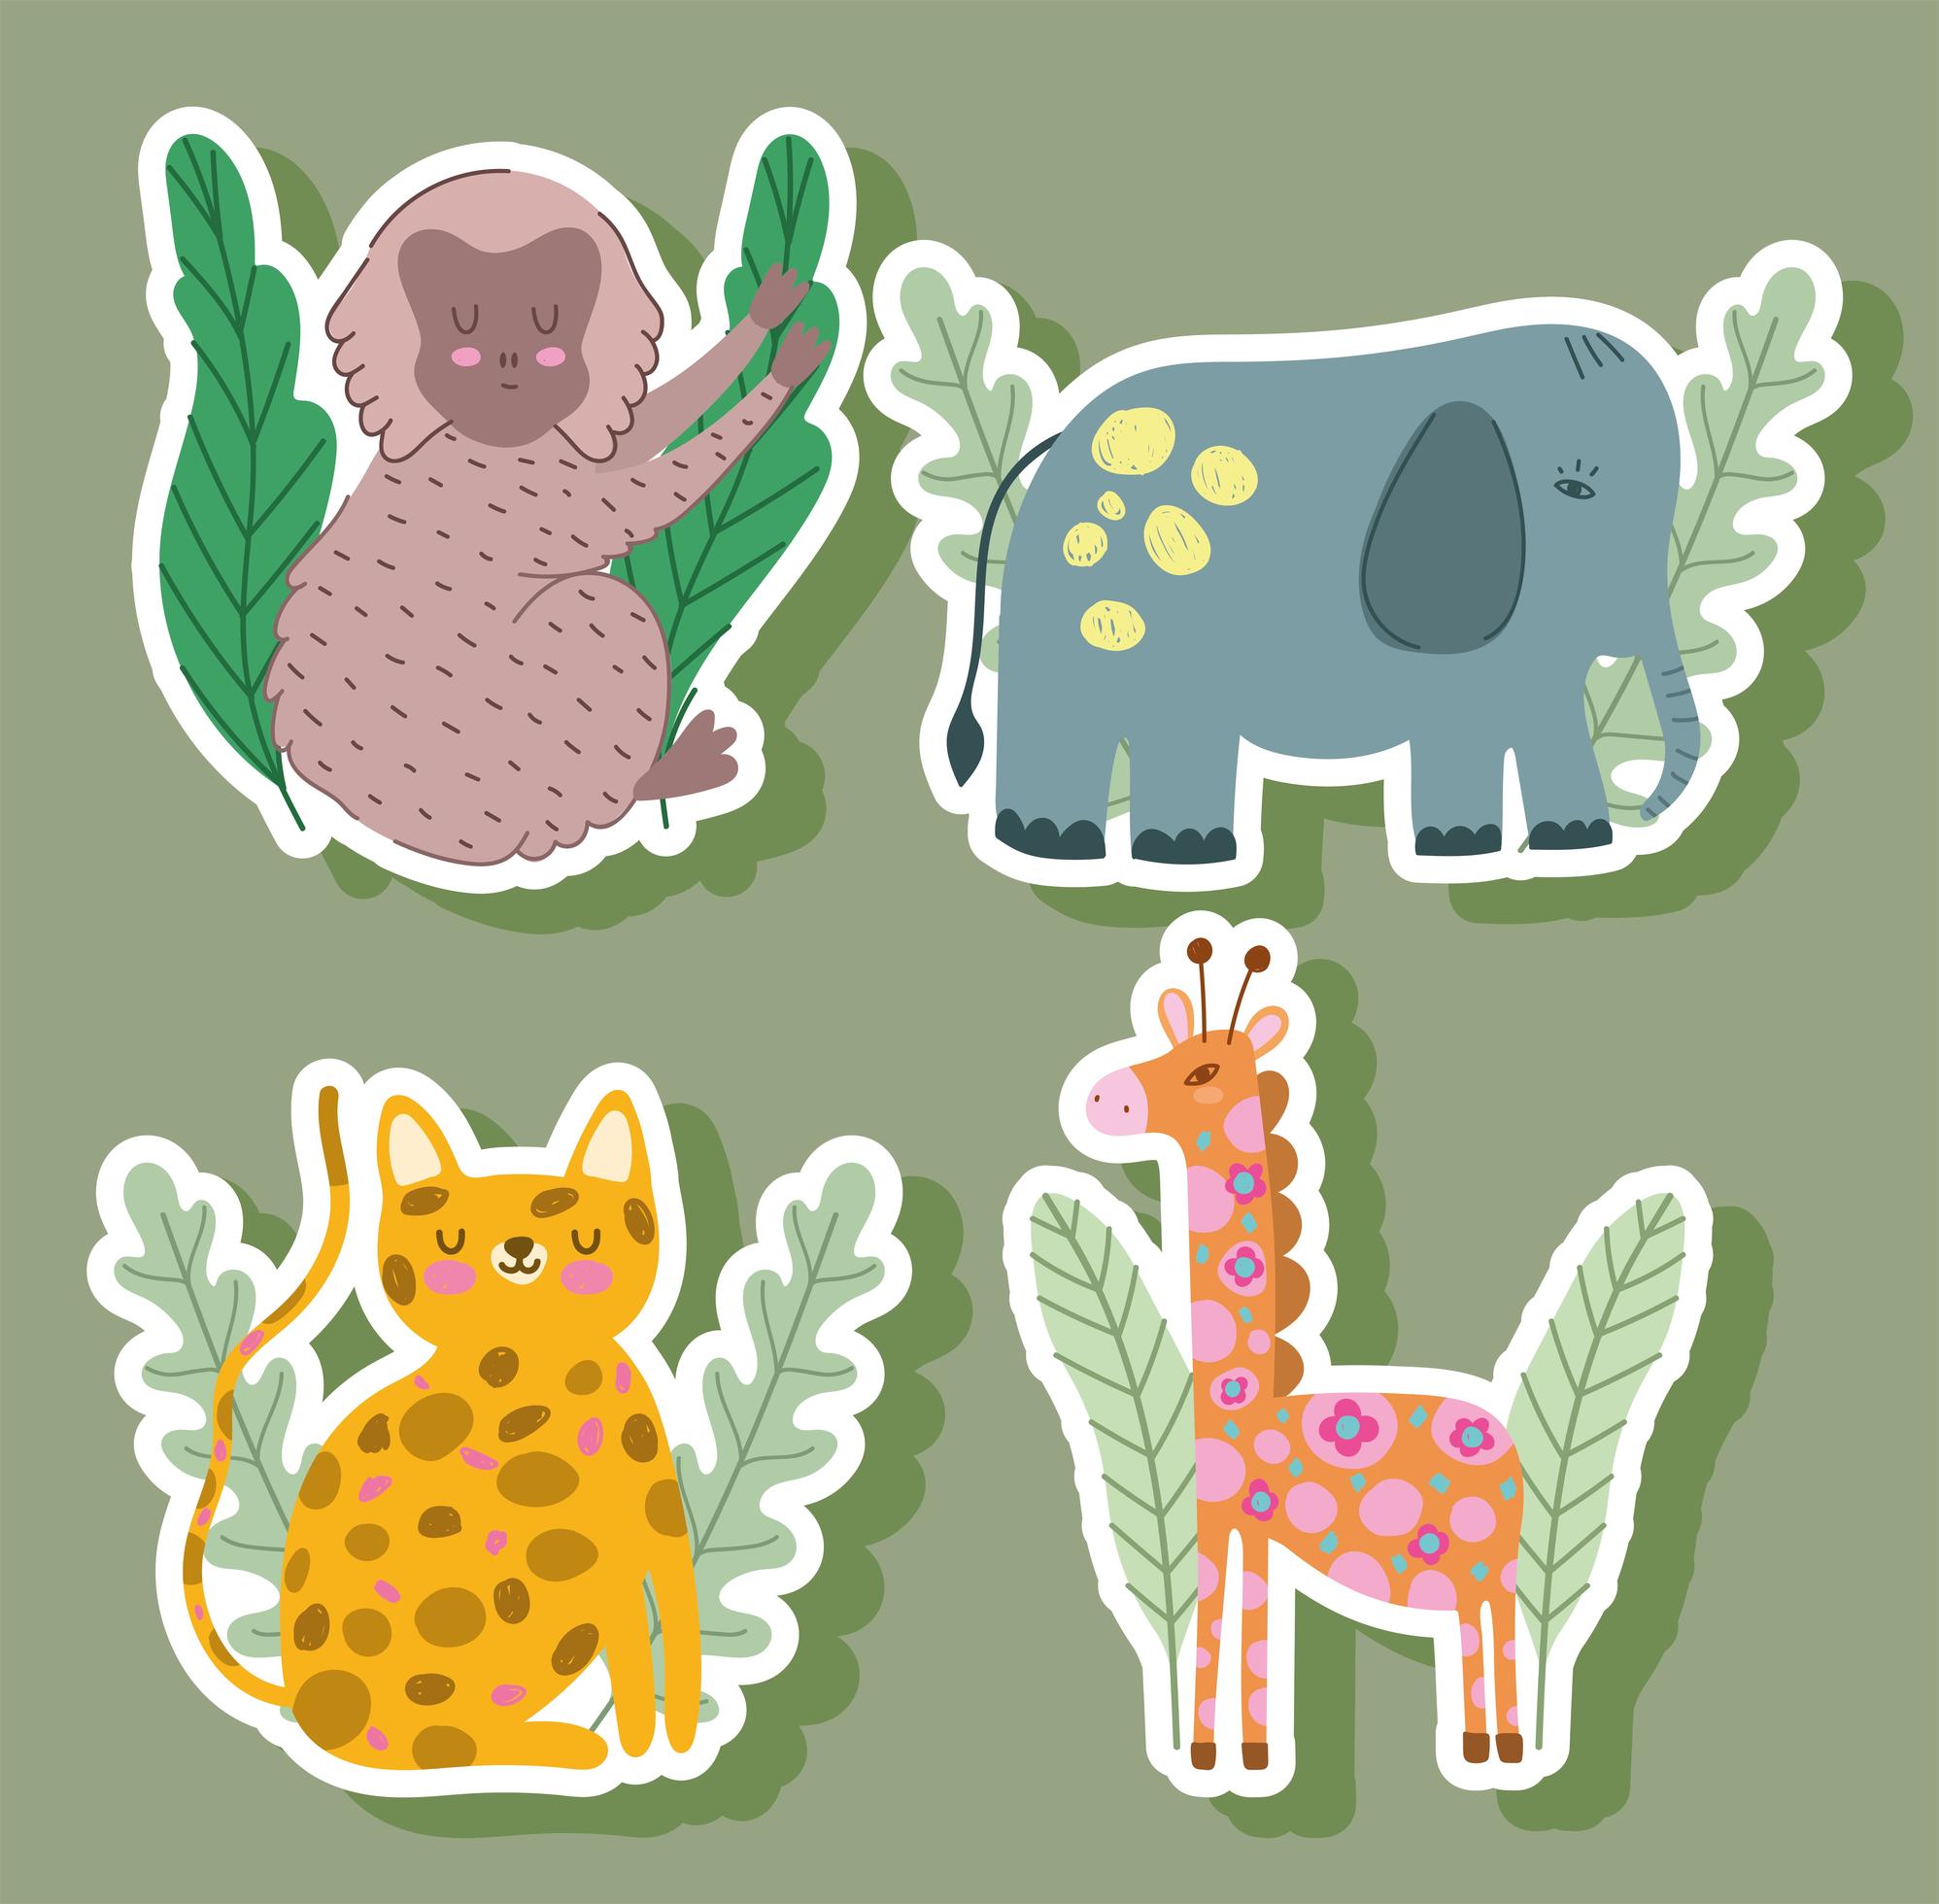 Scented Safari”: "Жираф" (Giraffe), "обезьяна" (Monkey); “Lakefield”: "олень" (Deer), "утка" (Duck);.